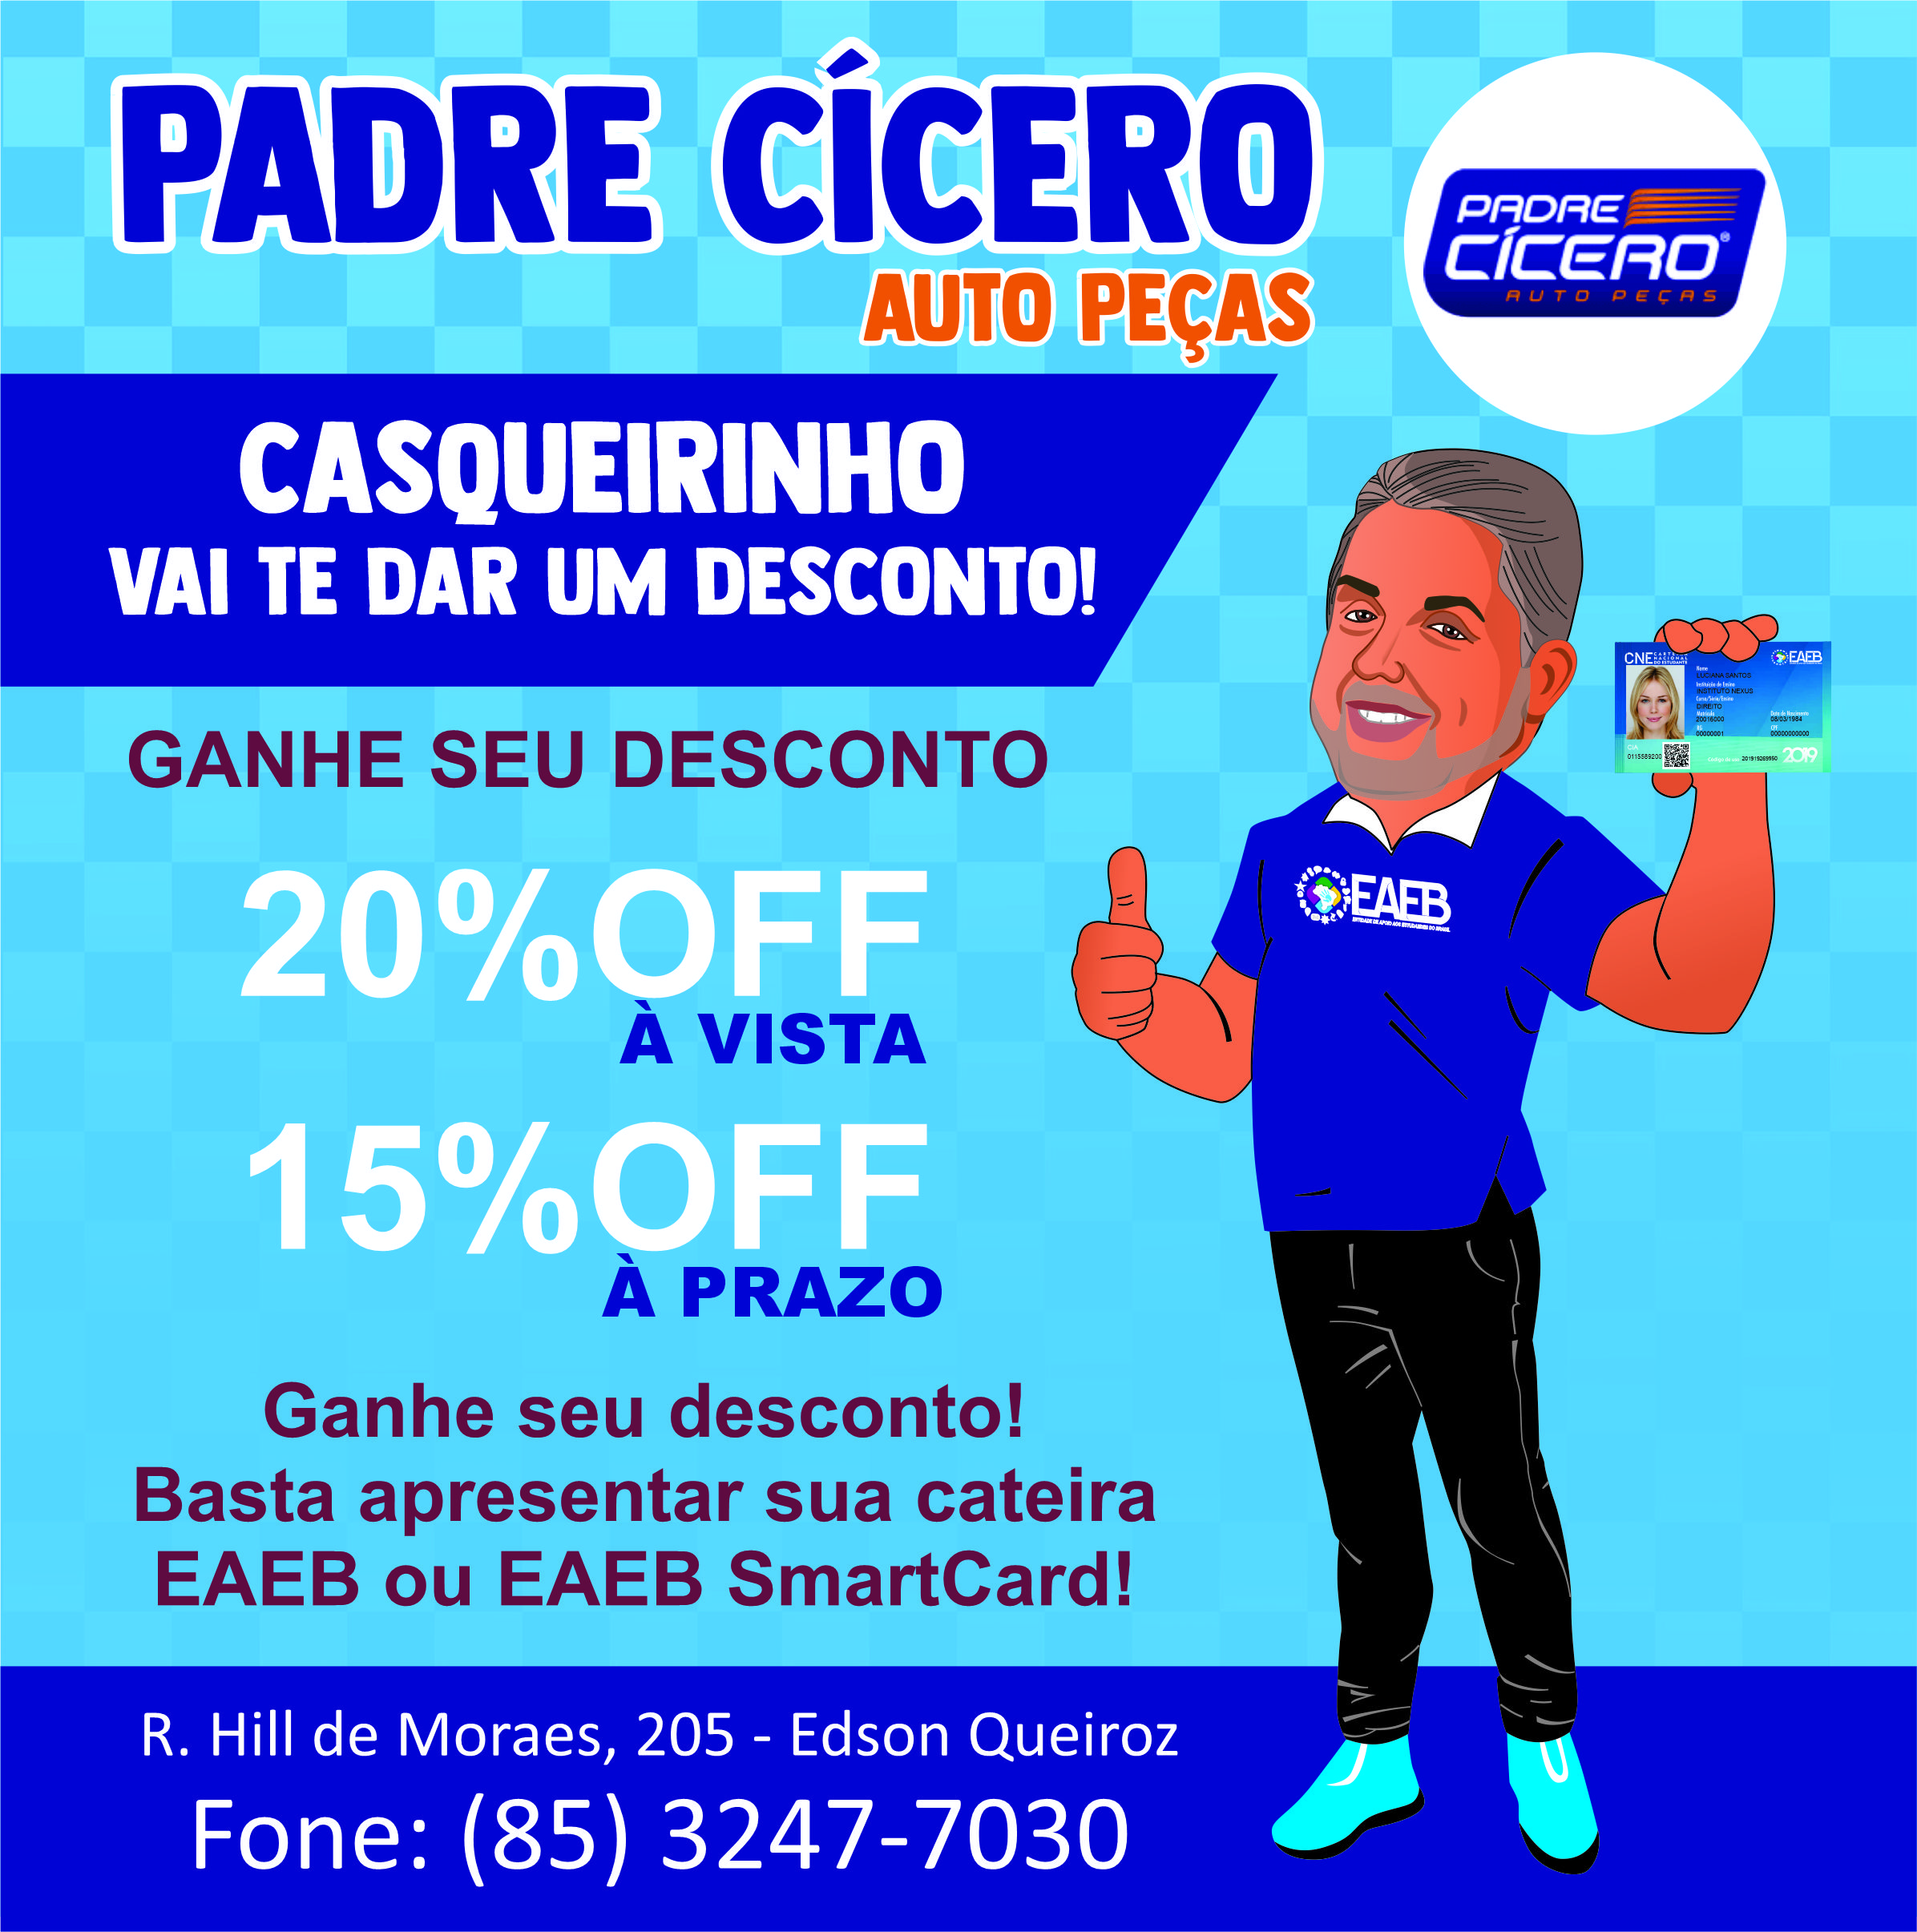 Padre Cícero Auto Peças, Brands of the World™